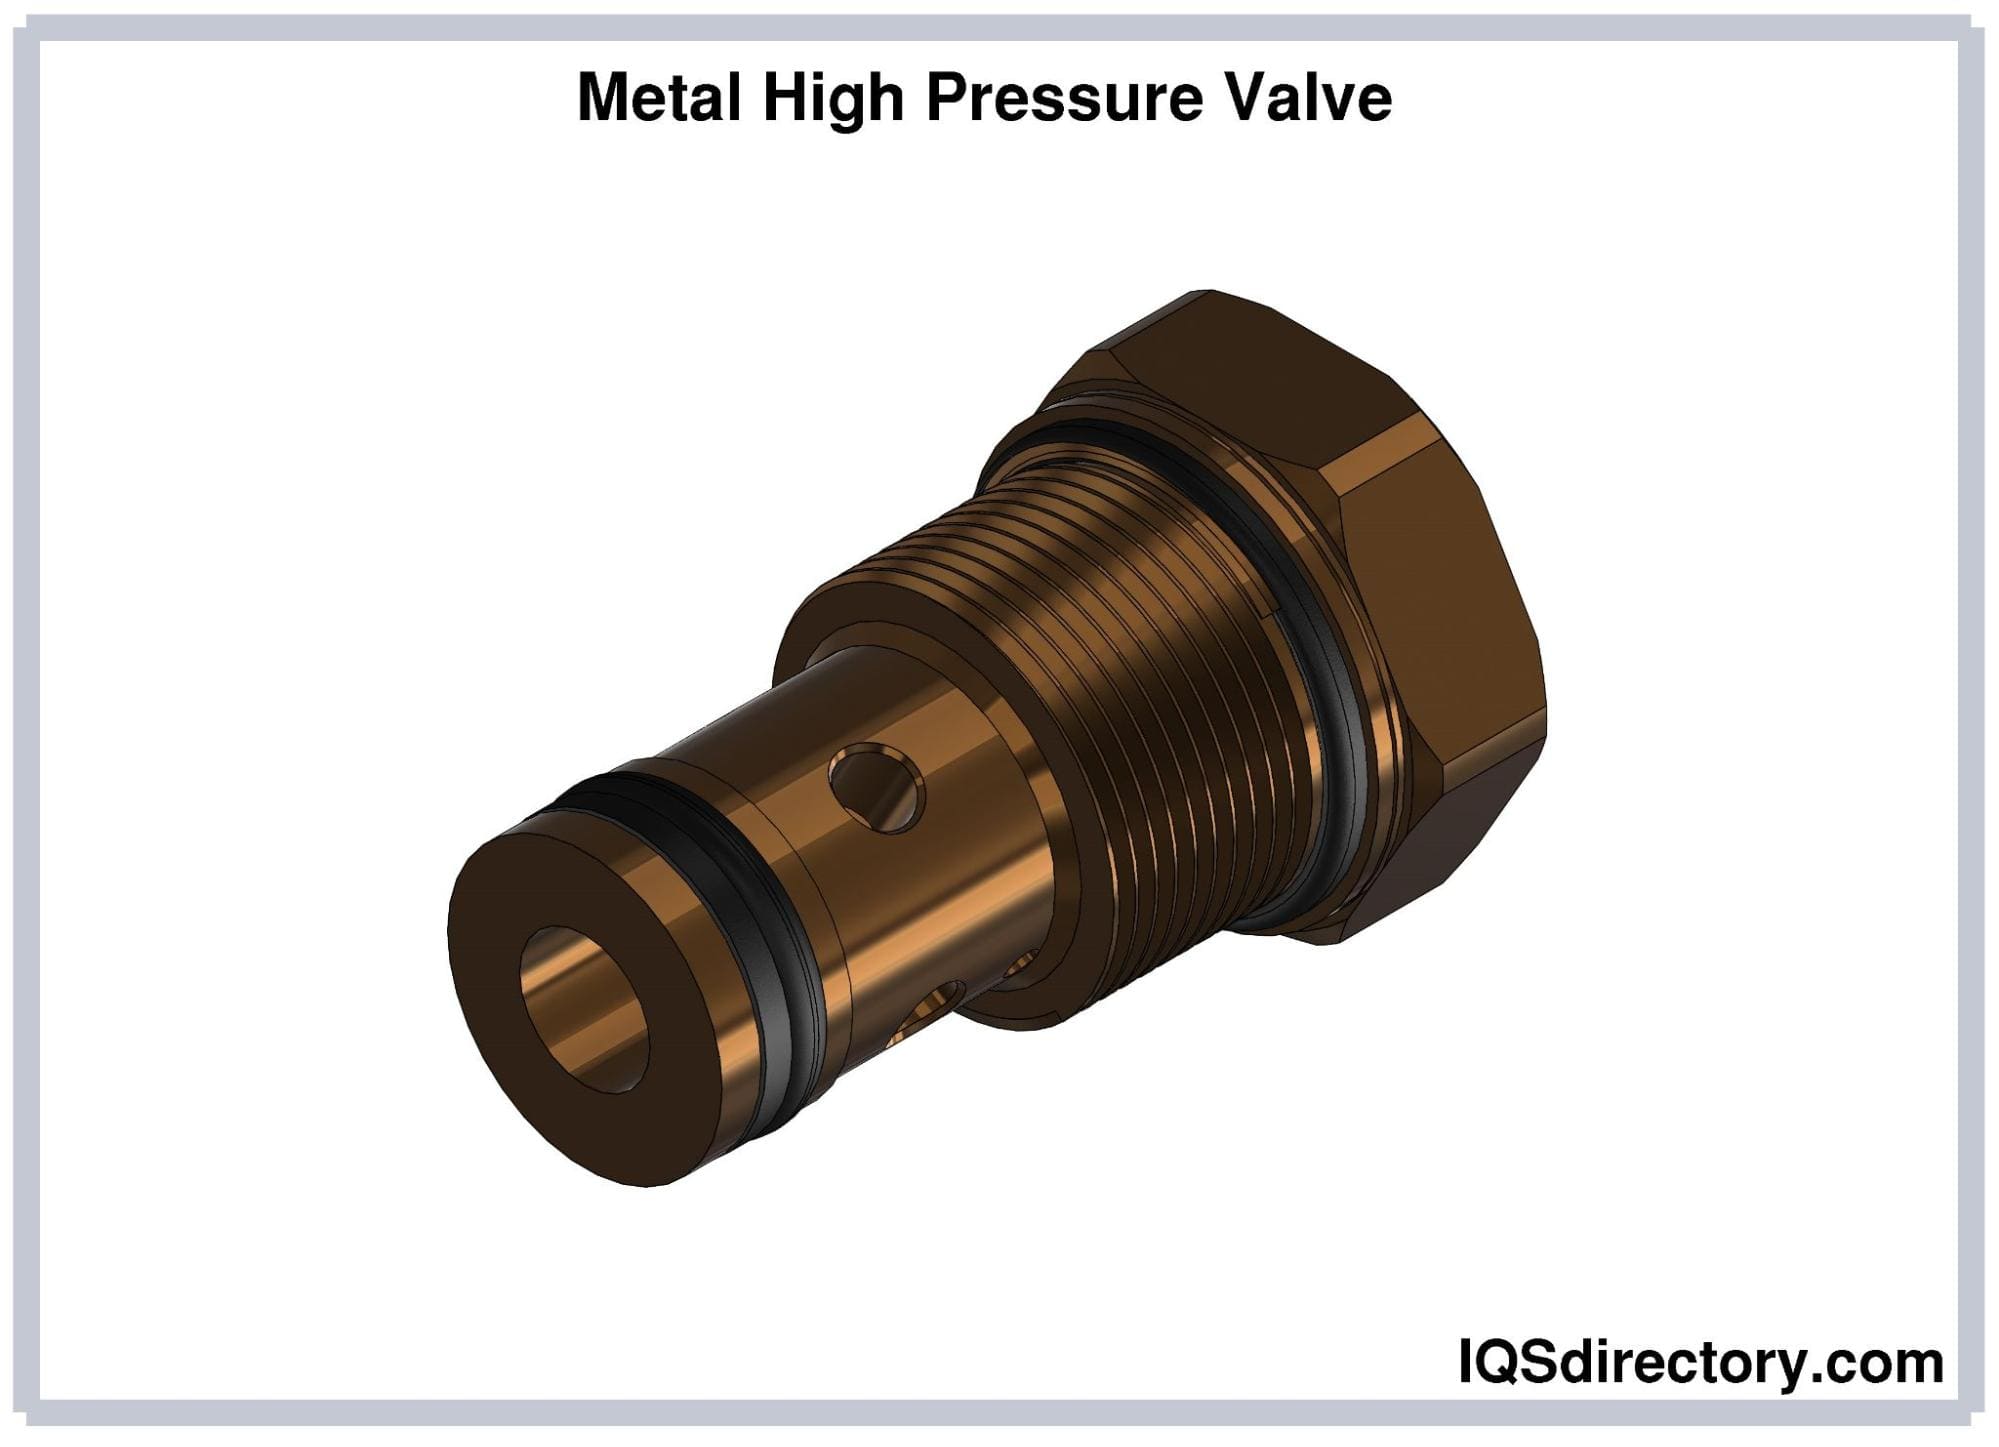 Metal High Pressure Valve